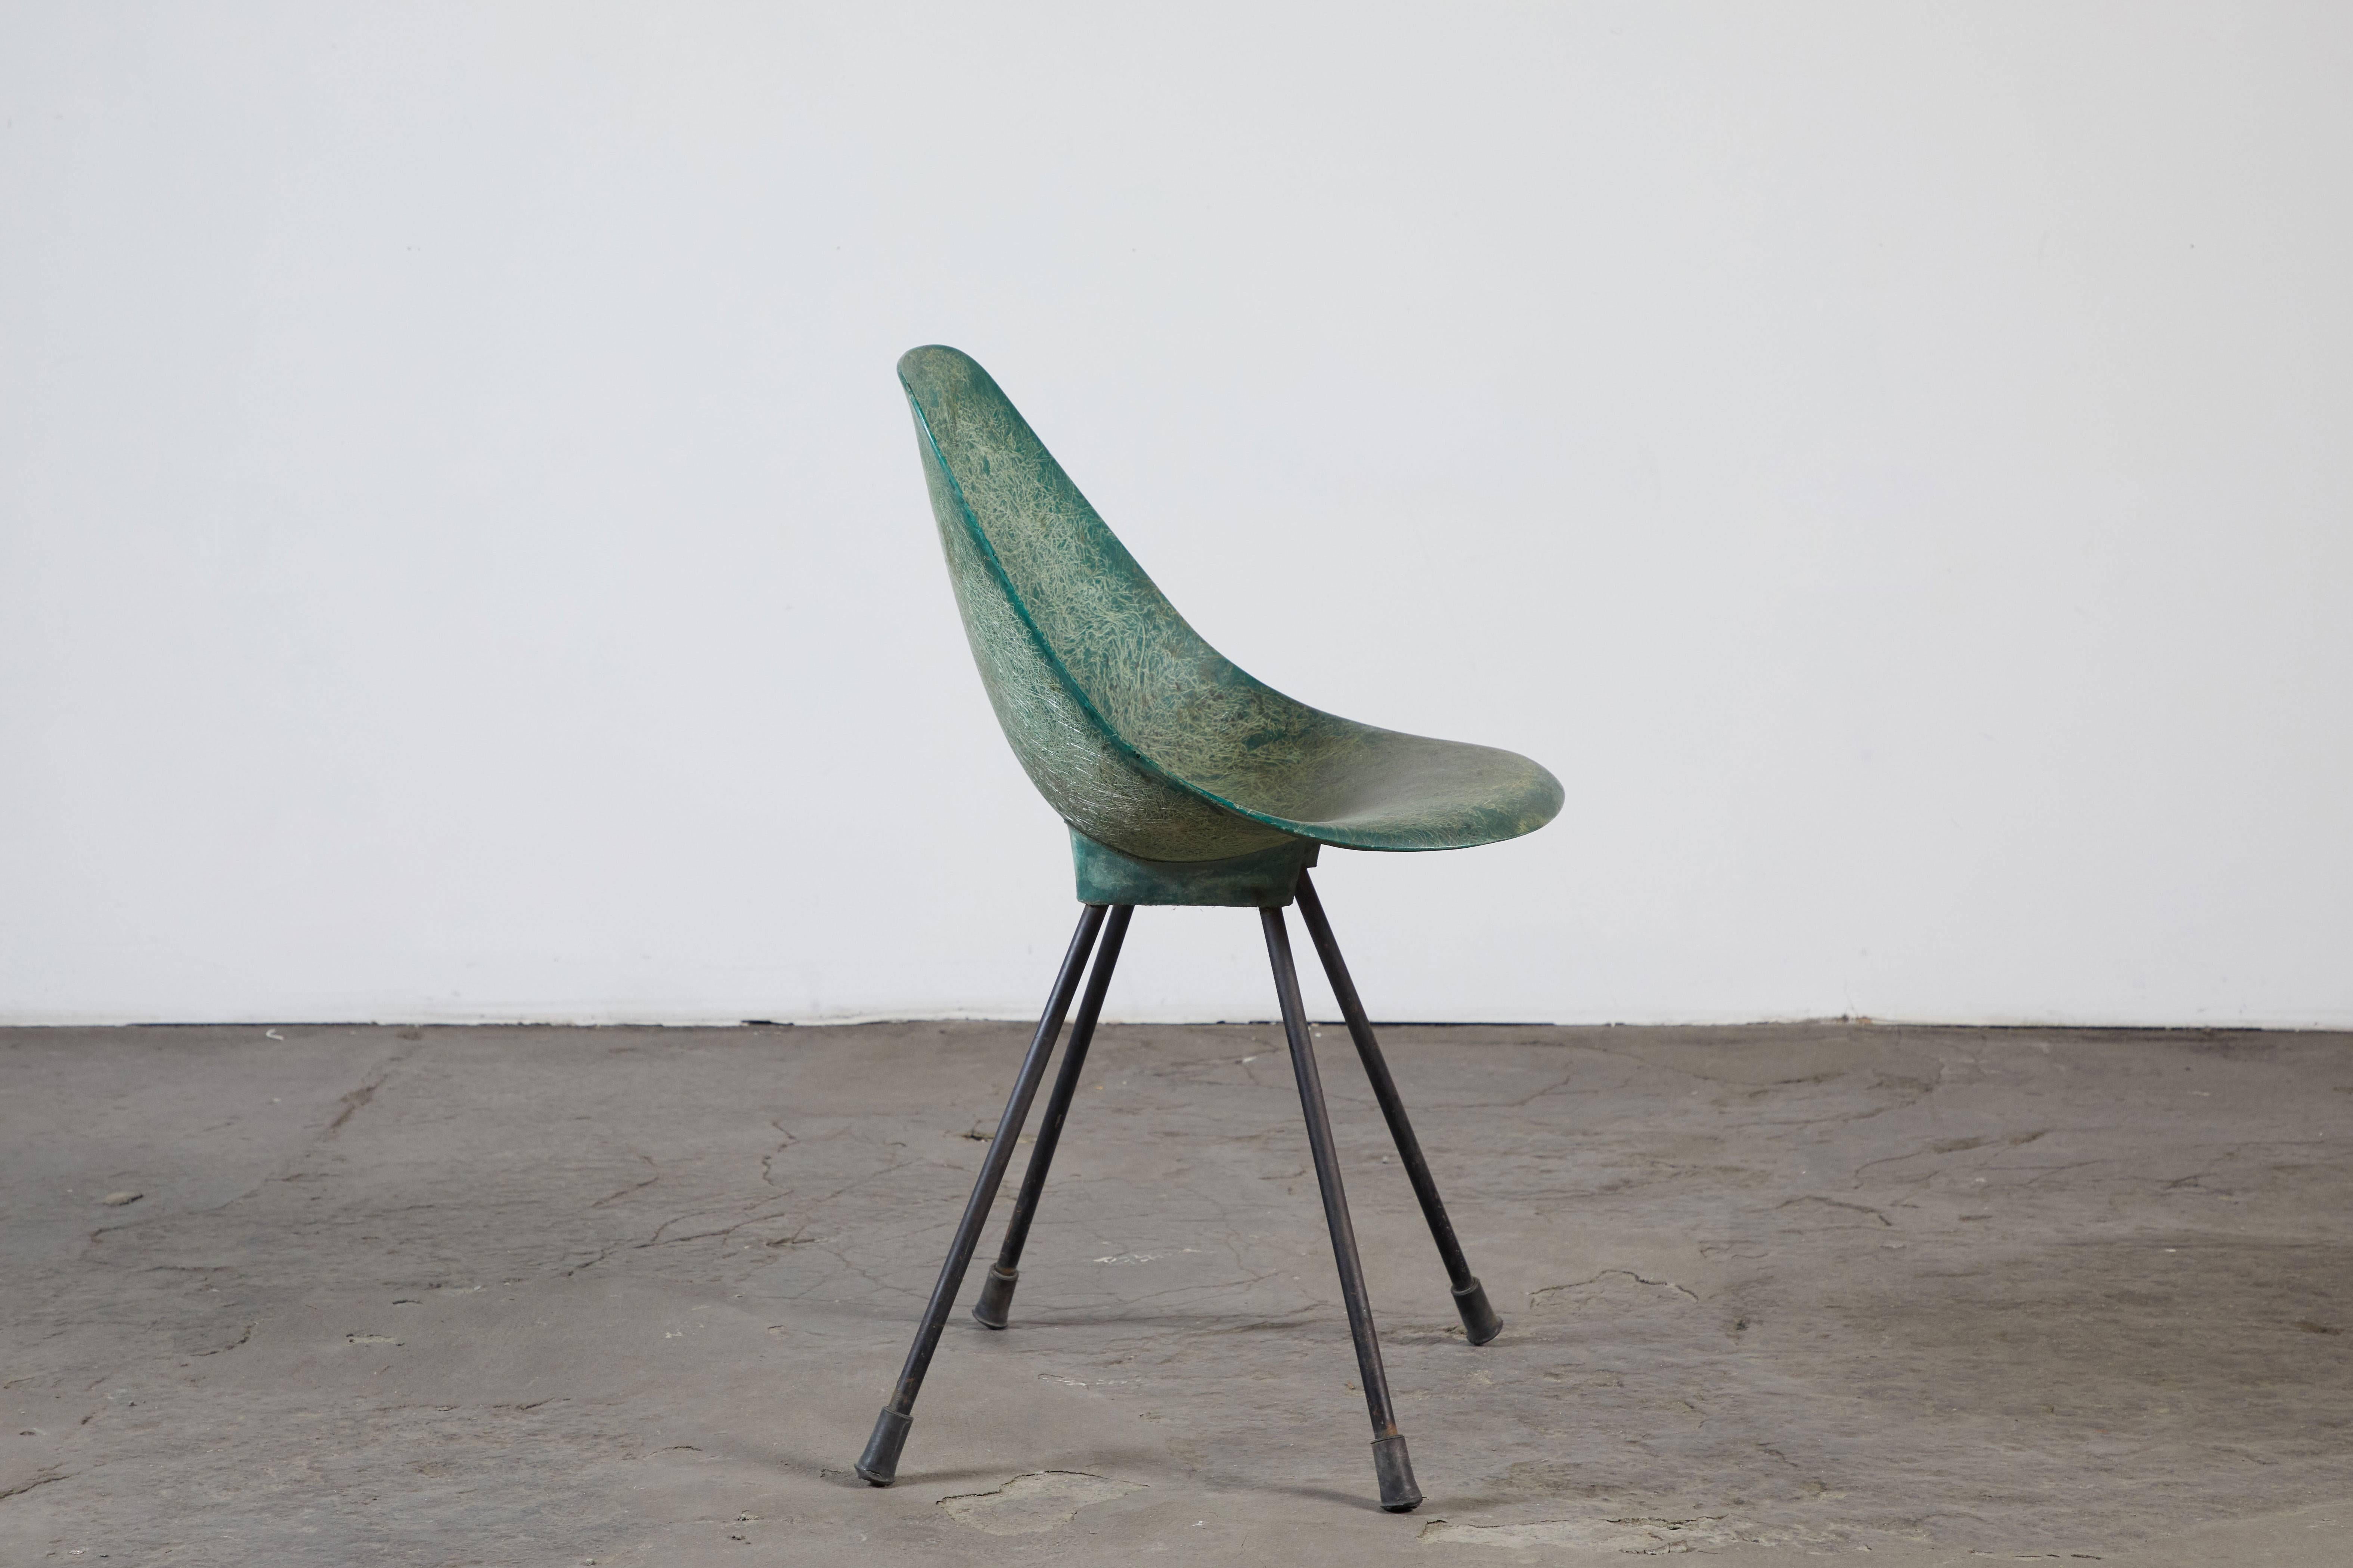 Fiberglass chair by Jean-René Picard. Made in France, circa 1950s.